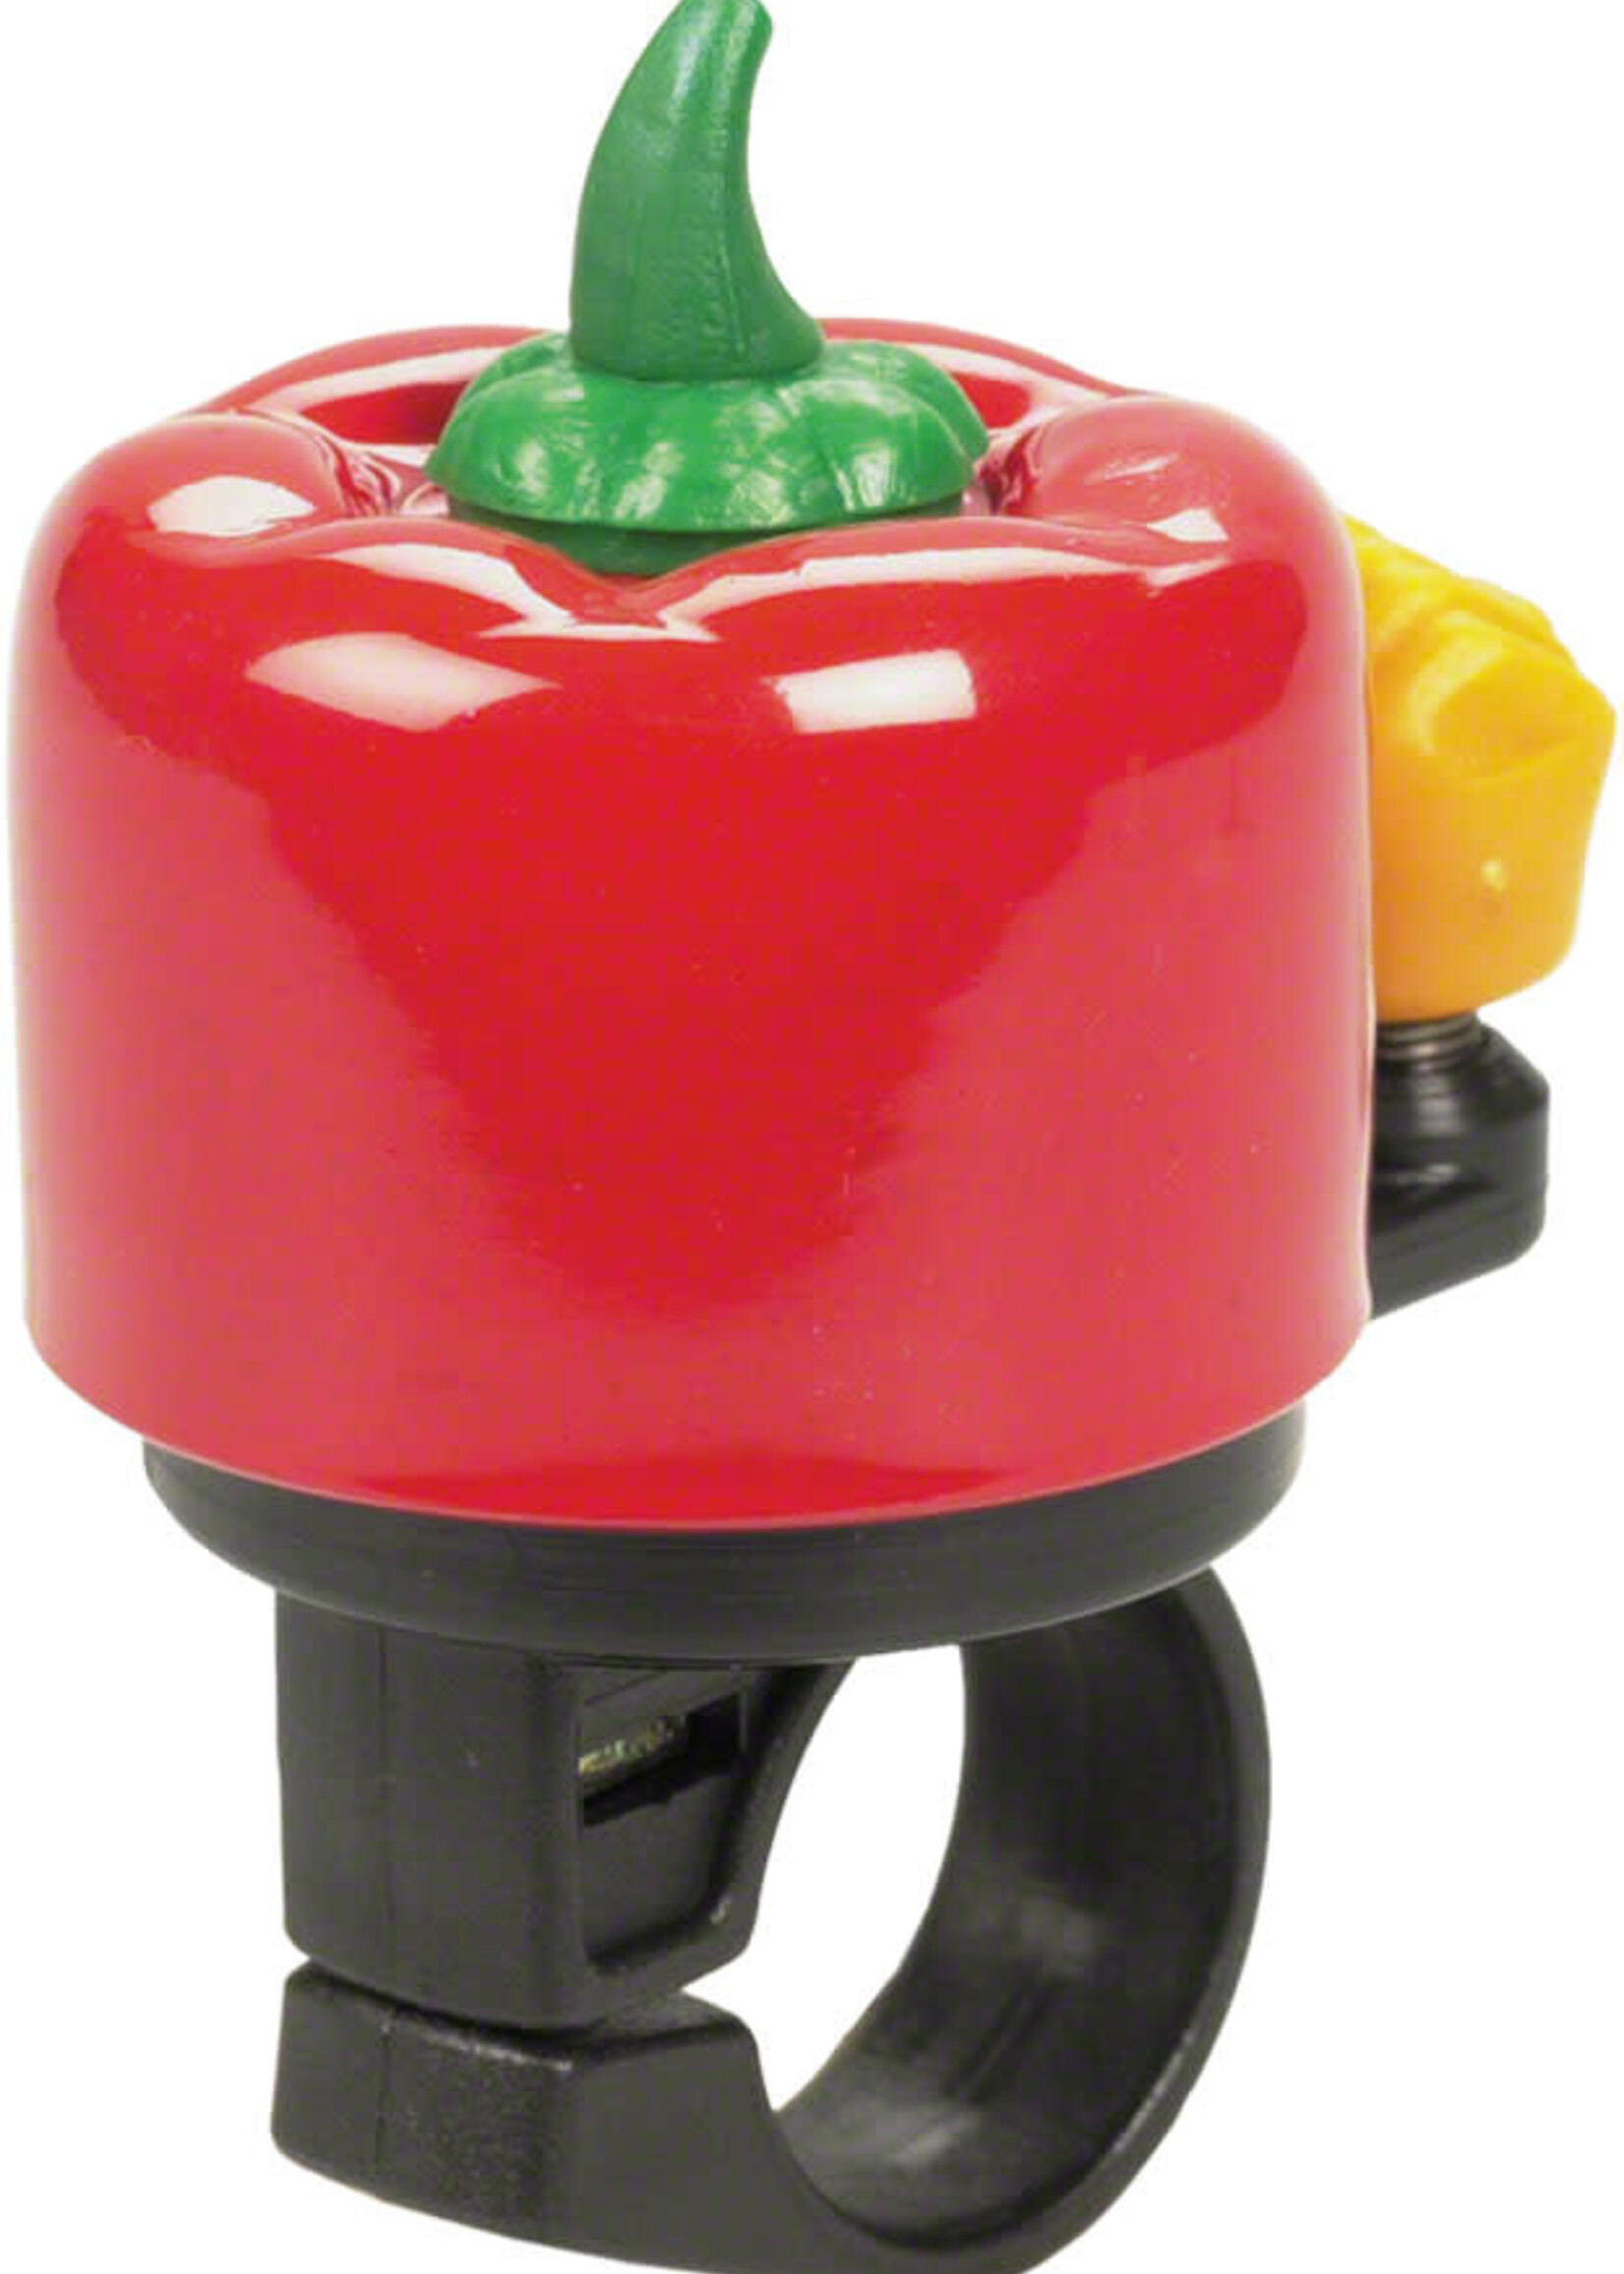 Dimension Dimension Red Bell Pepper Mini Bell